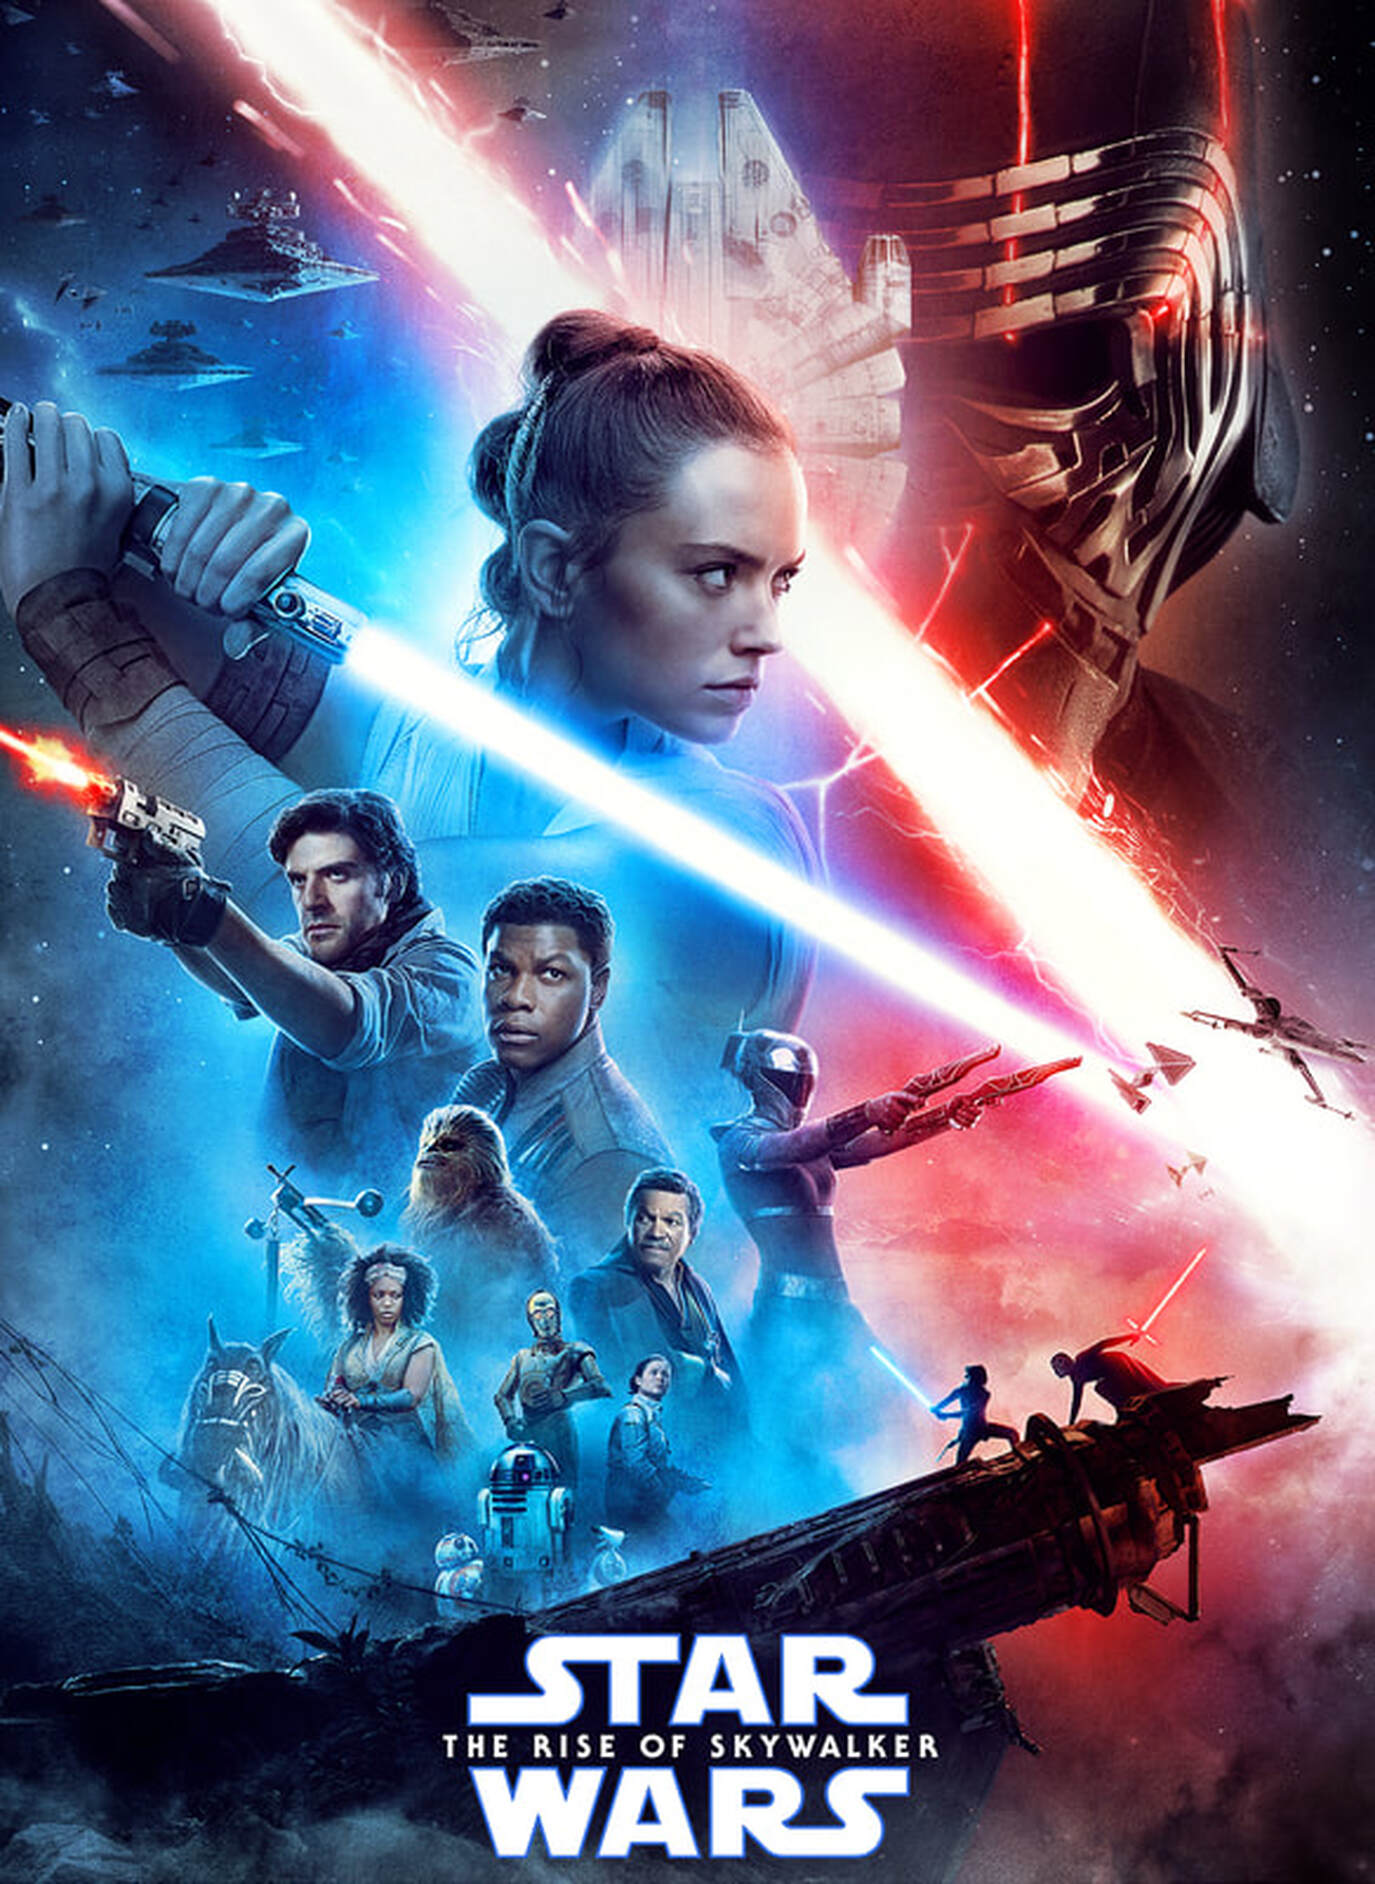 Star Wars, Episode IX: The Rise of Skywalker movie poster